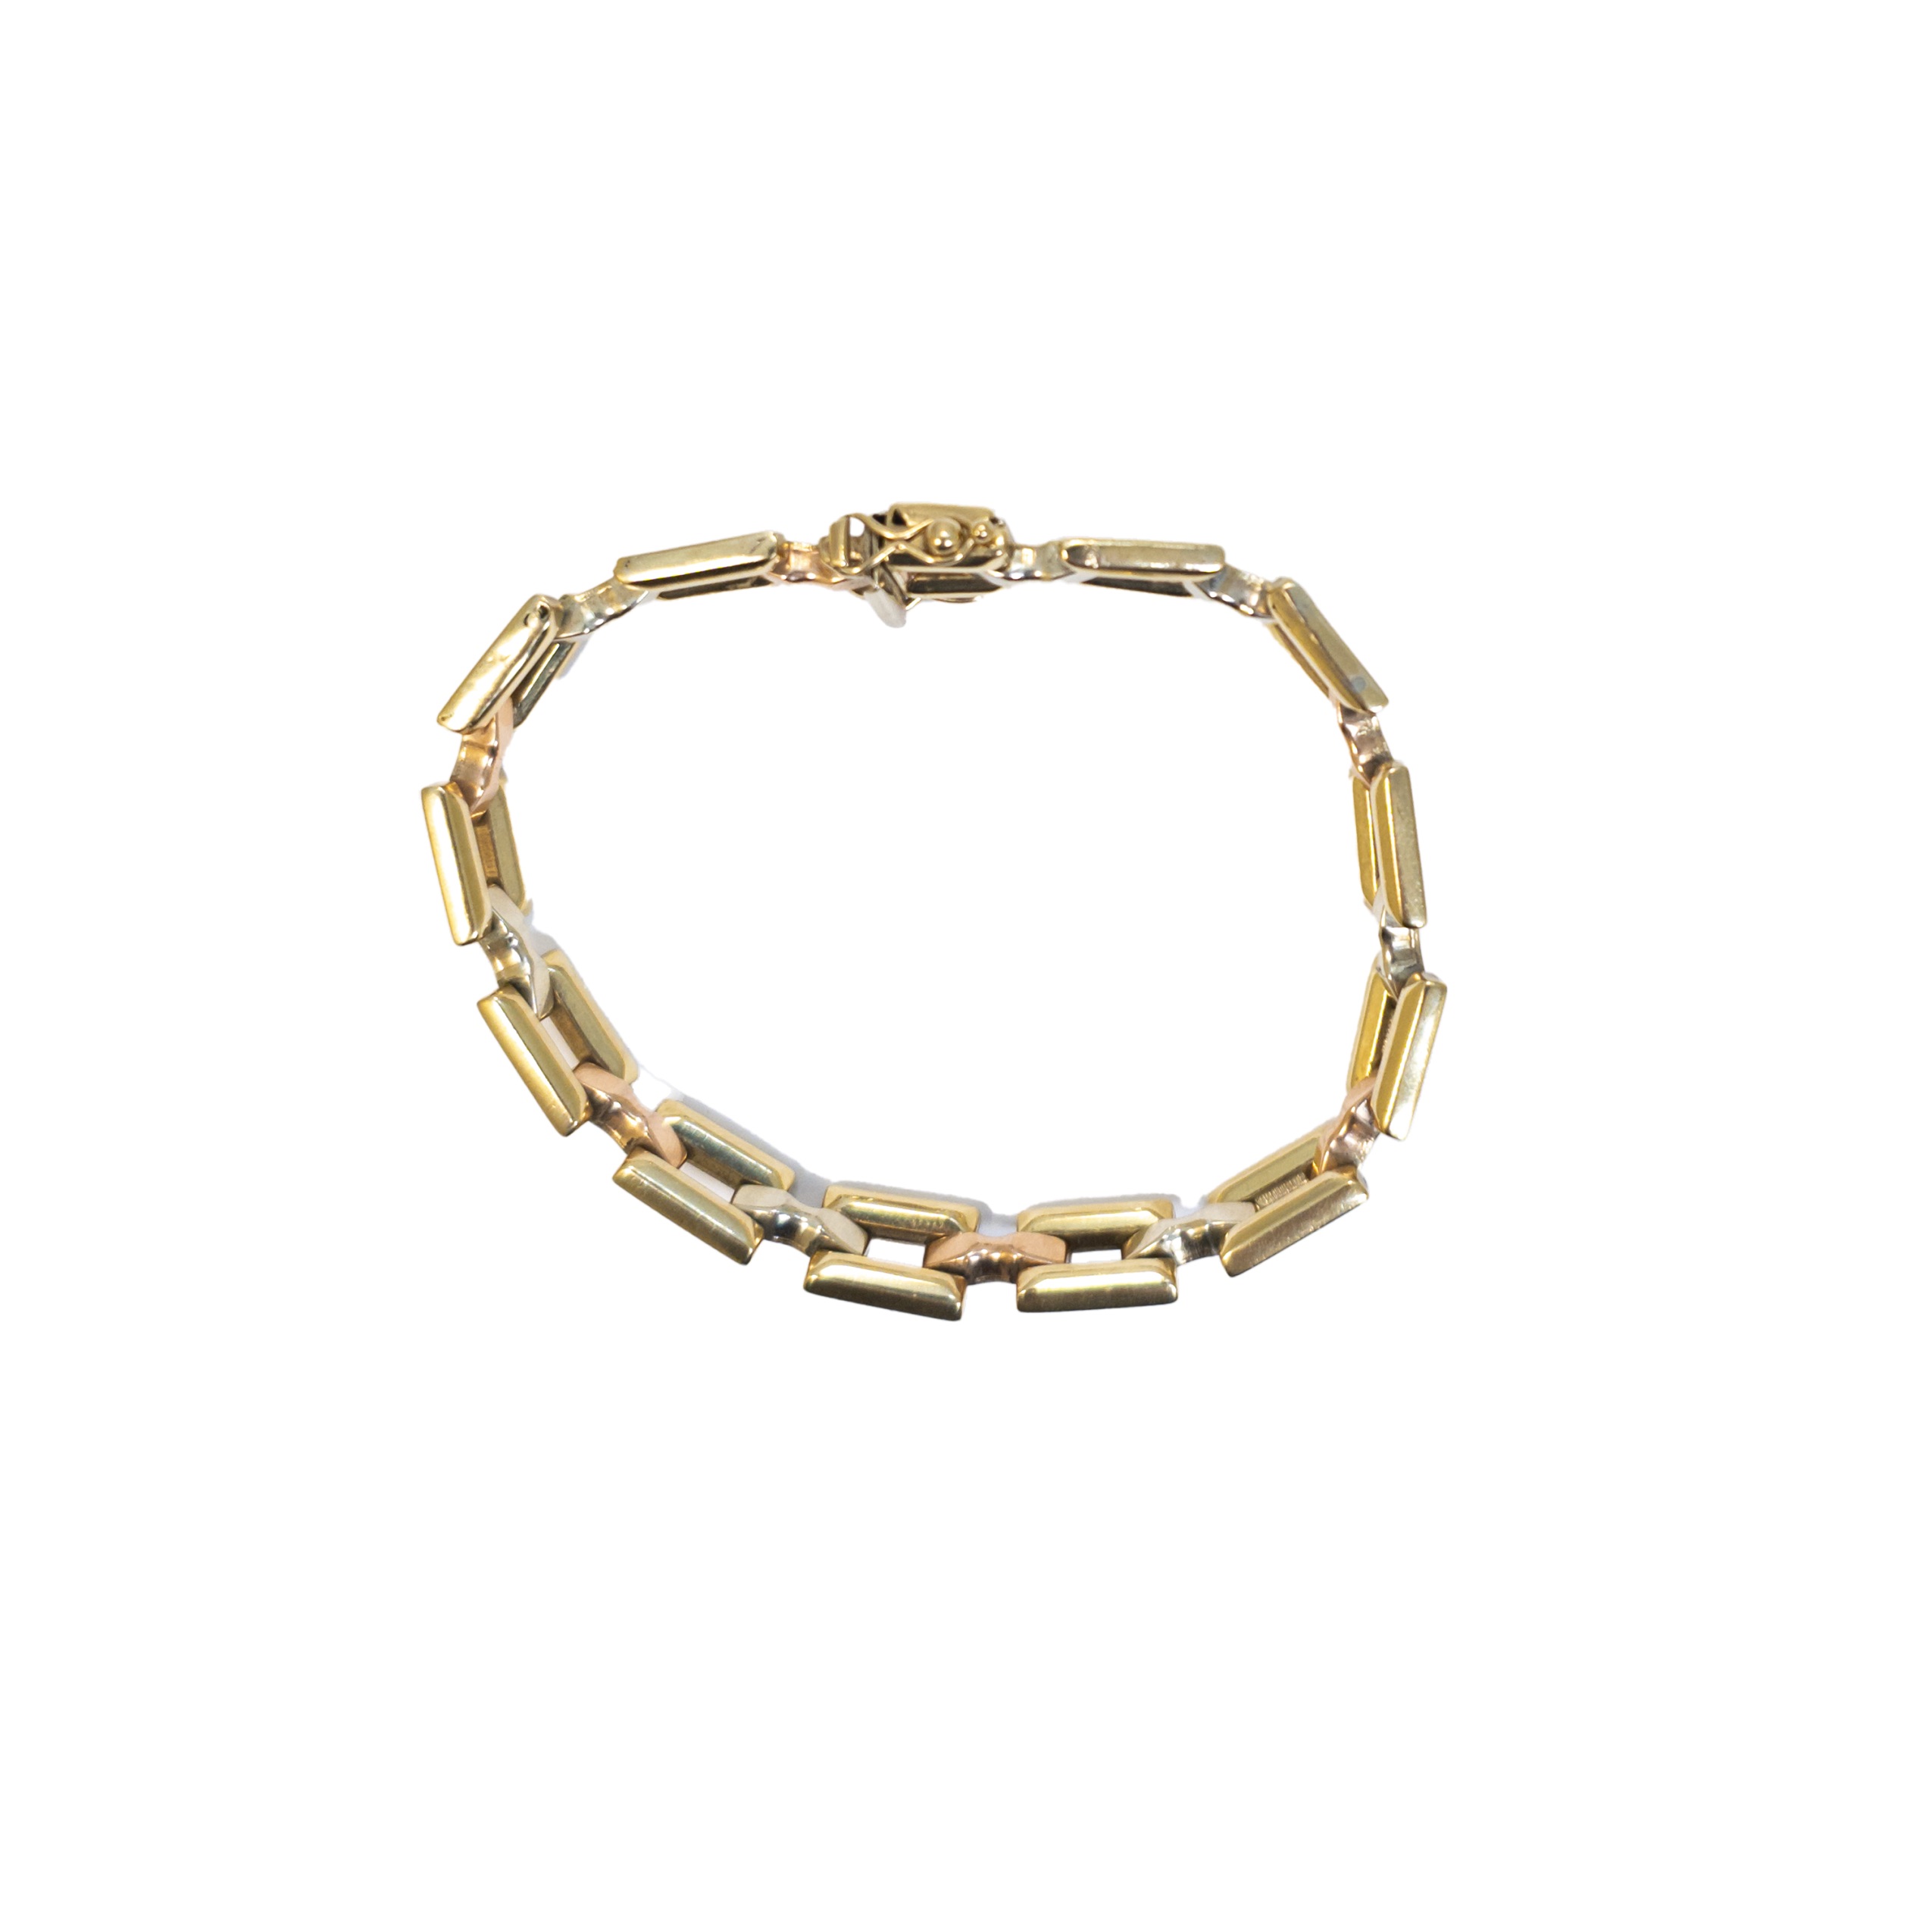 Continental, Circa 1960, A 9 carat three colour gold brick link bracelet